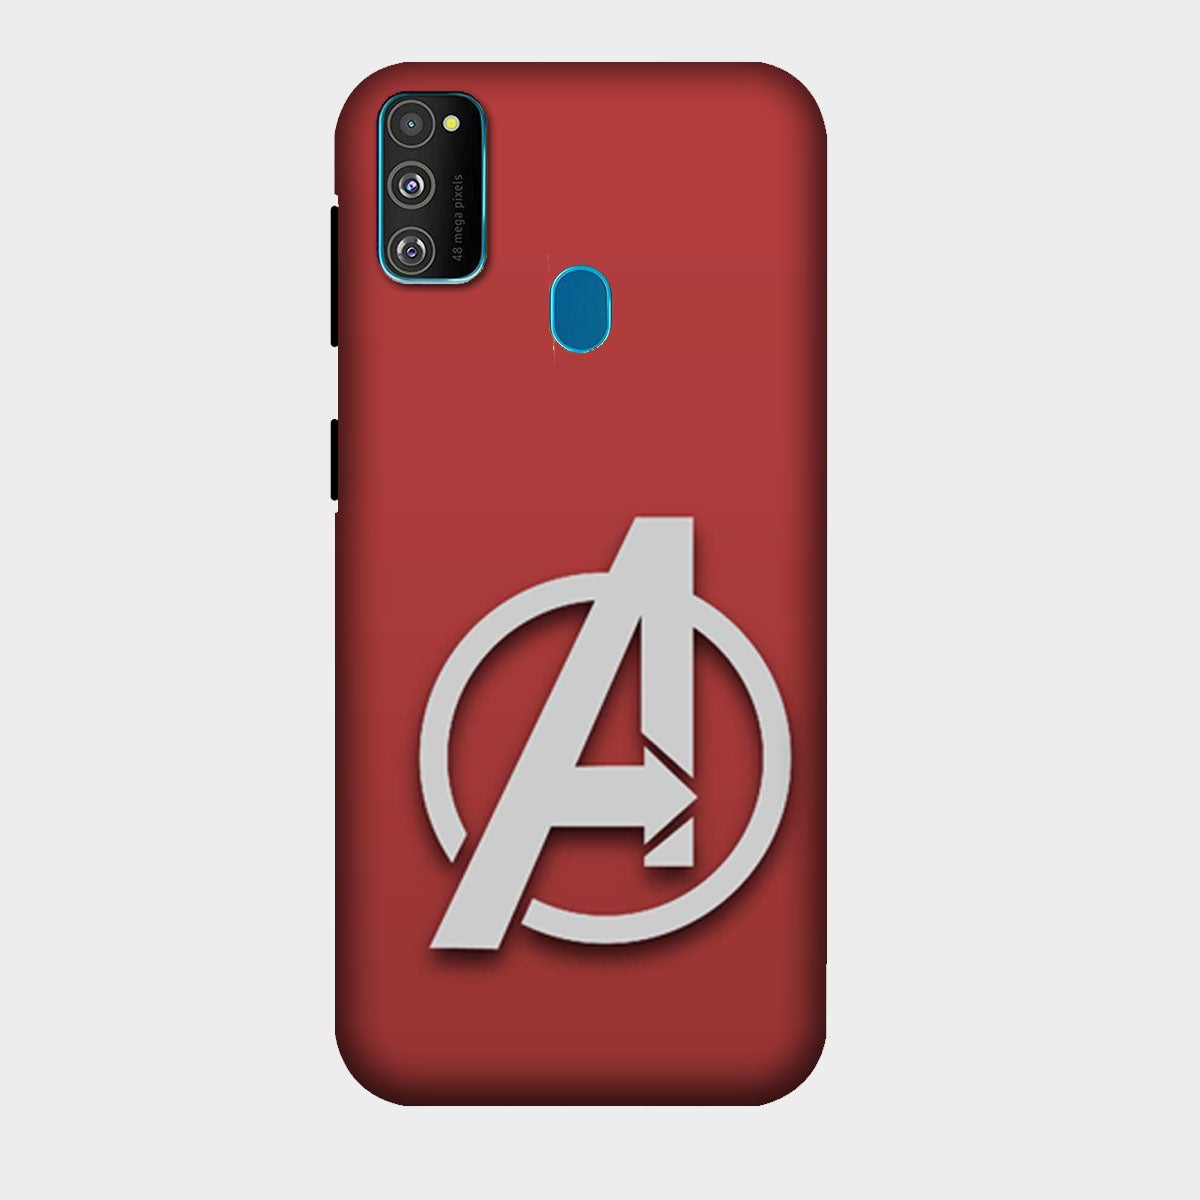 Avenger - Red - Mobile Phone Cover - Hard Case - Samsung - Samsung